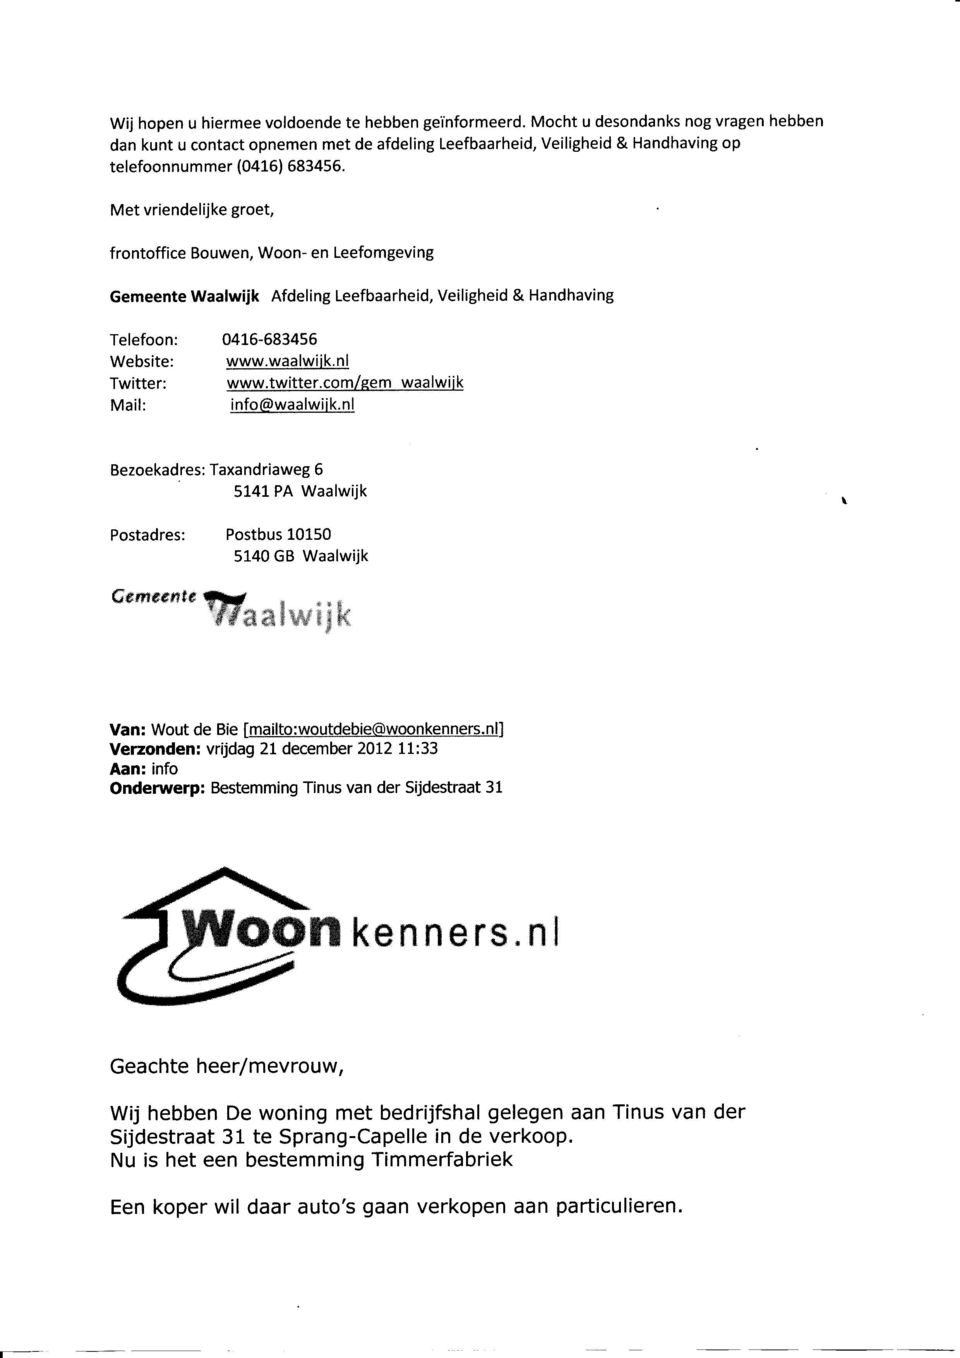 Met vriendelijke groet, frontoffice Bouwen, Woon- en Leefomgeving Gemeente Waalwijk Afdeling Leefbaarheid, Veiligheid & Handhaving Telefoon: Website: Twitter: Mail: 04L6-683456 www.waalwiik.nl www.